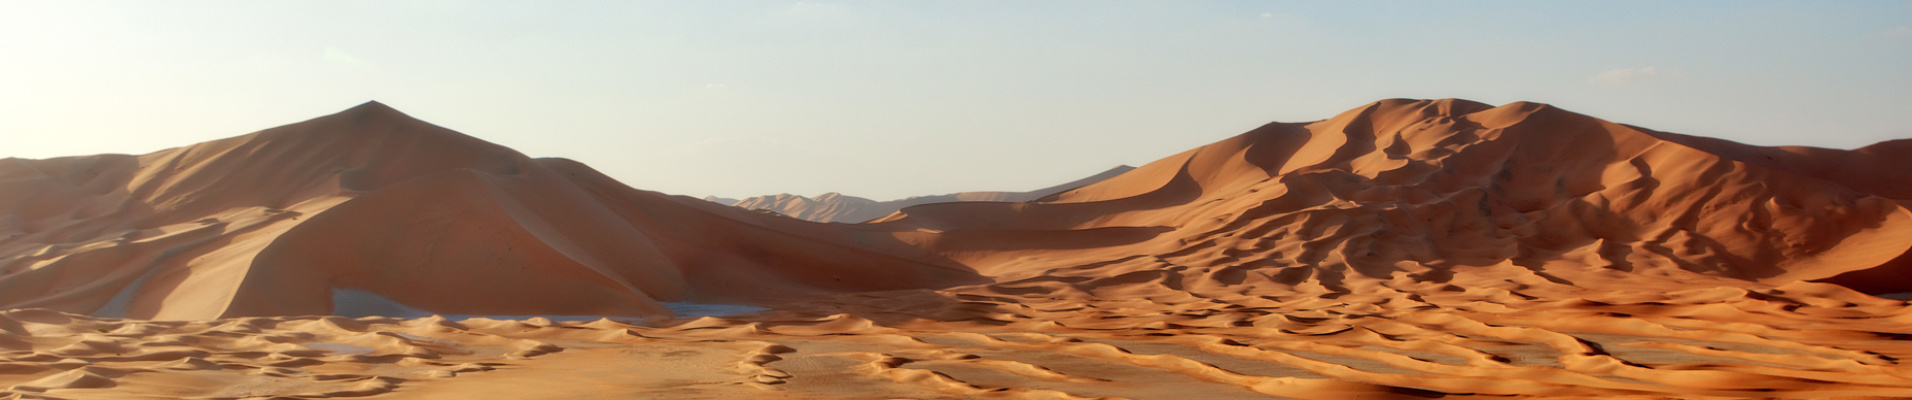 dunes de sable desert wahiba sands